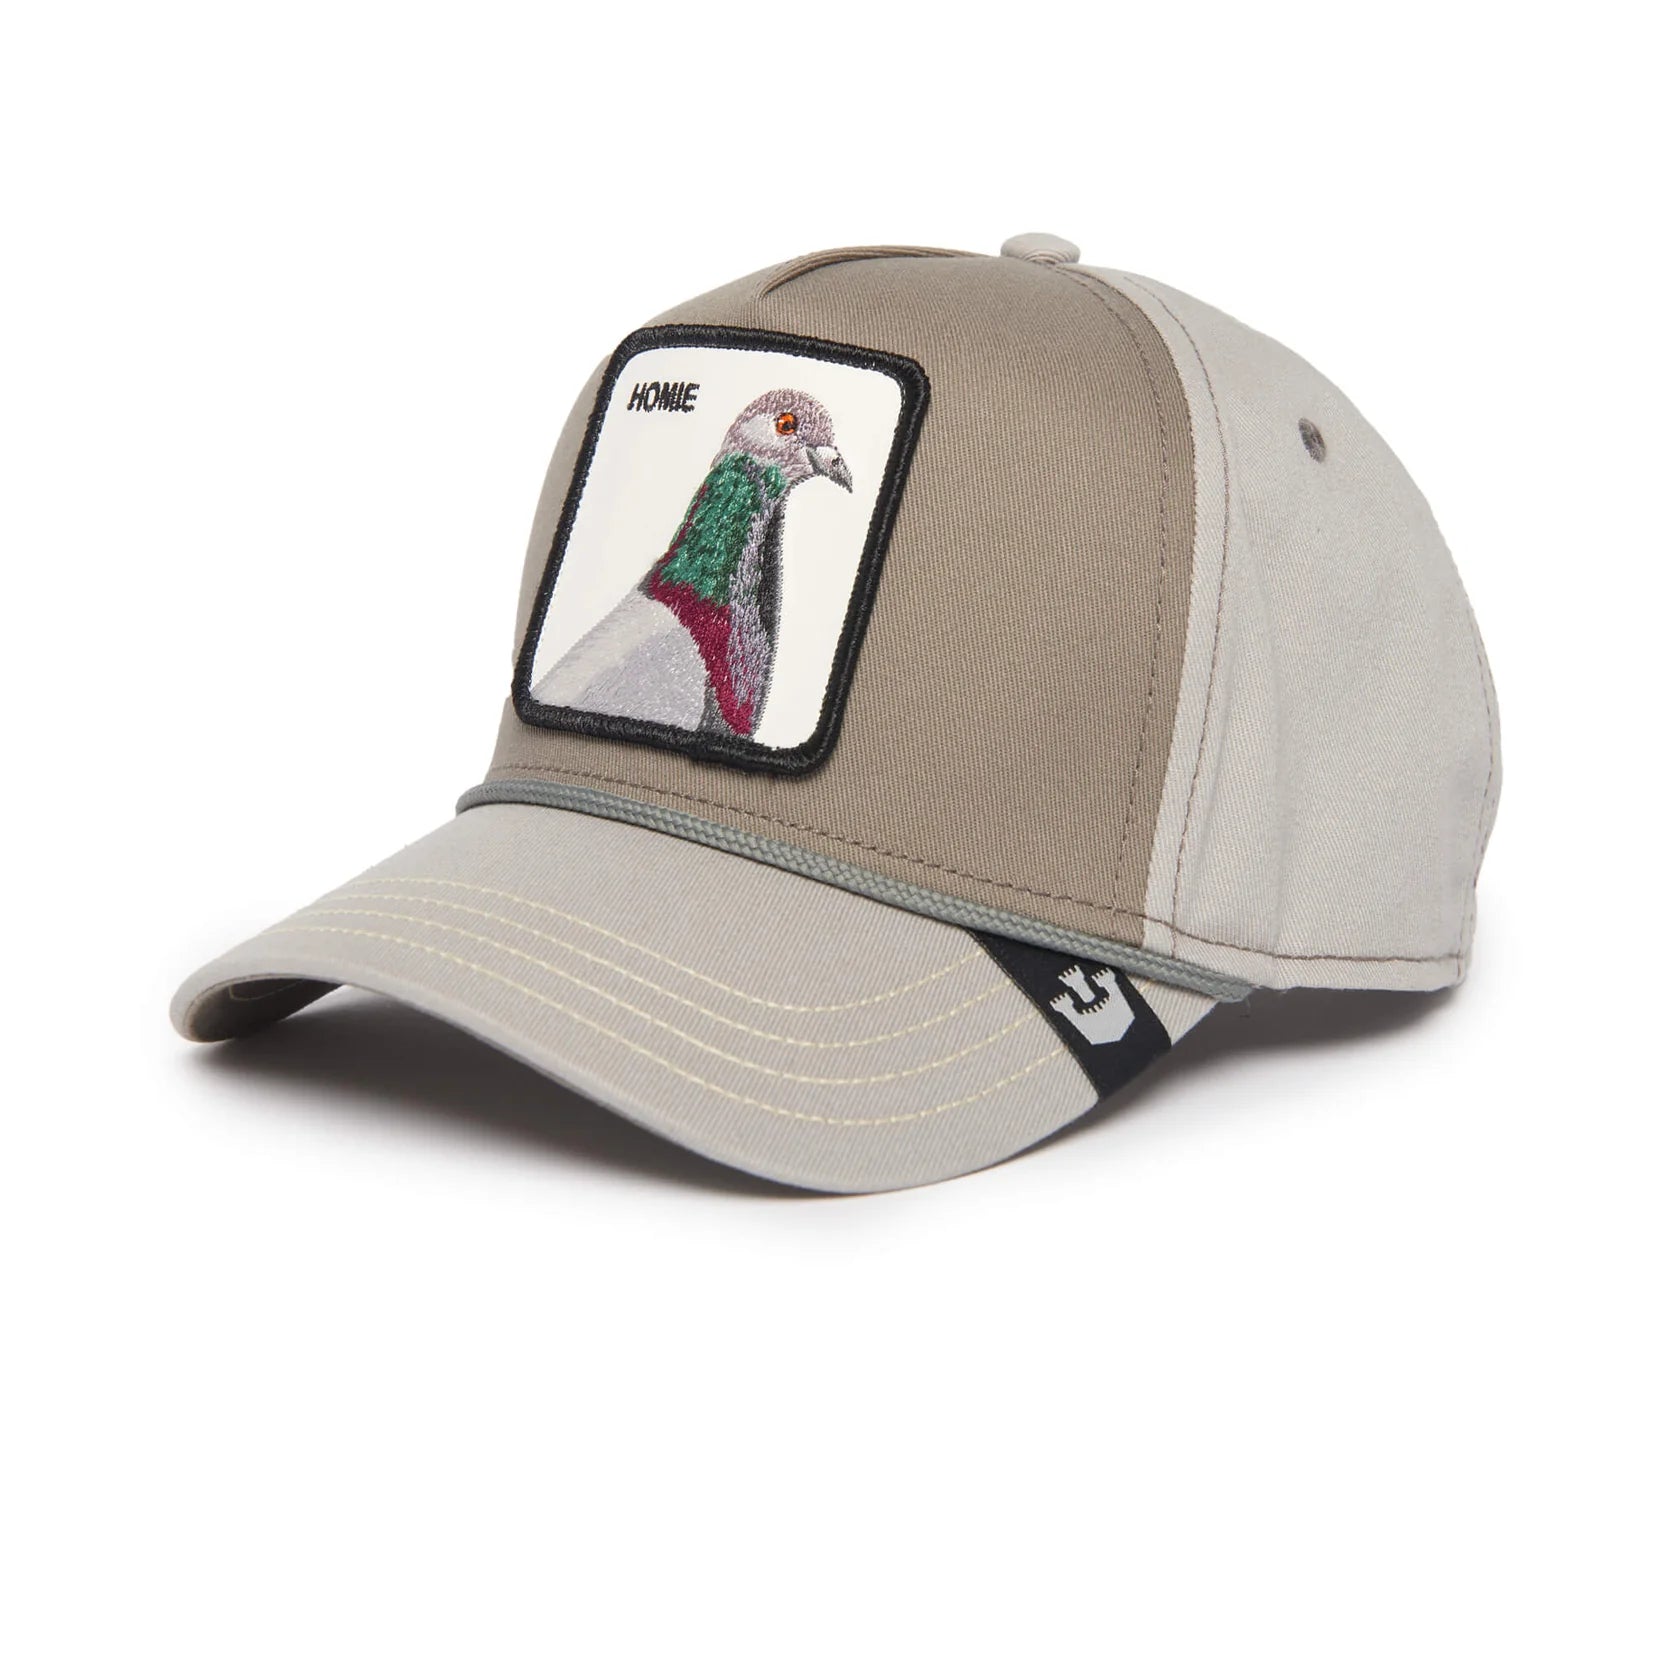 'Goorin Bros. Homie Pigeon Baseball Cap' in 'Grey' colour